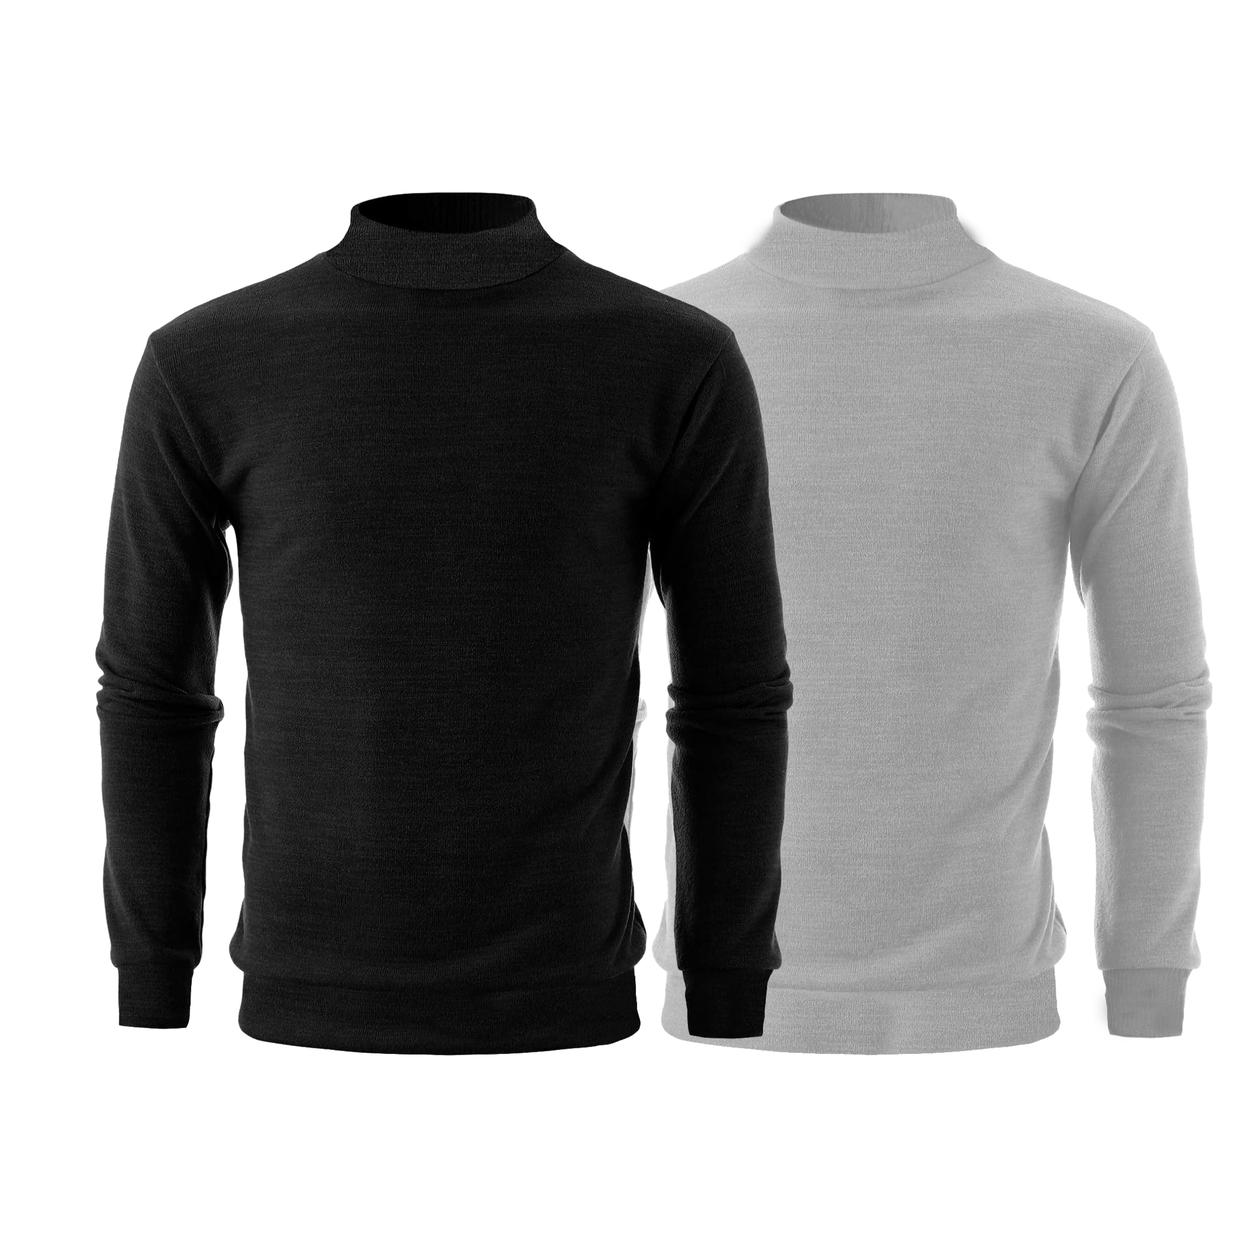 2-Pack: Men's Winter Warm Cozy Knit Slim Fit Mock Neck Sweater - Black & Black, Large